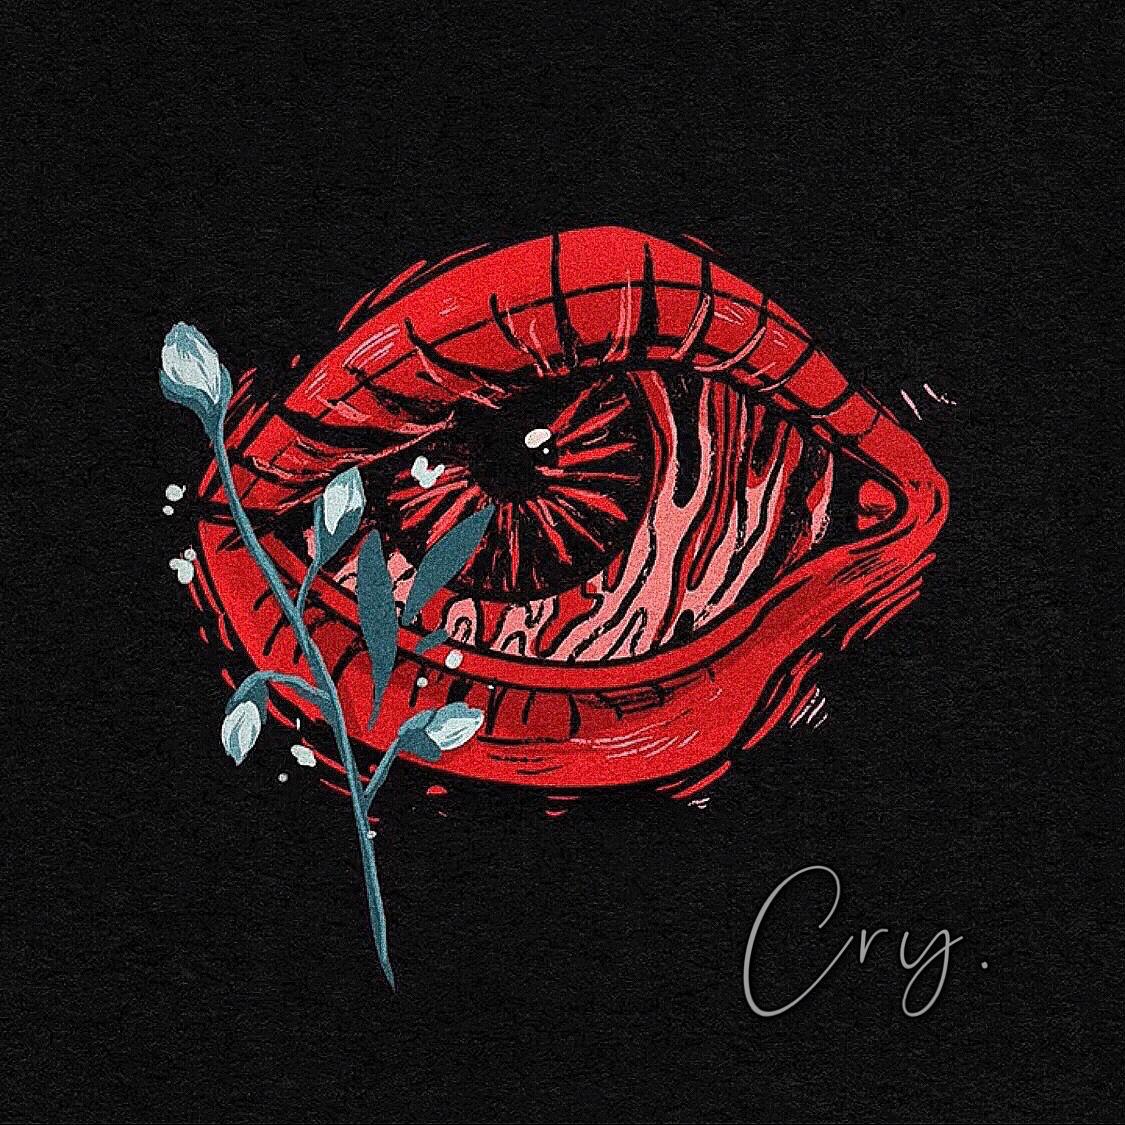 Yec - Cry